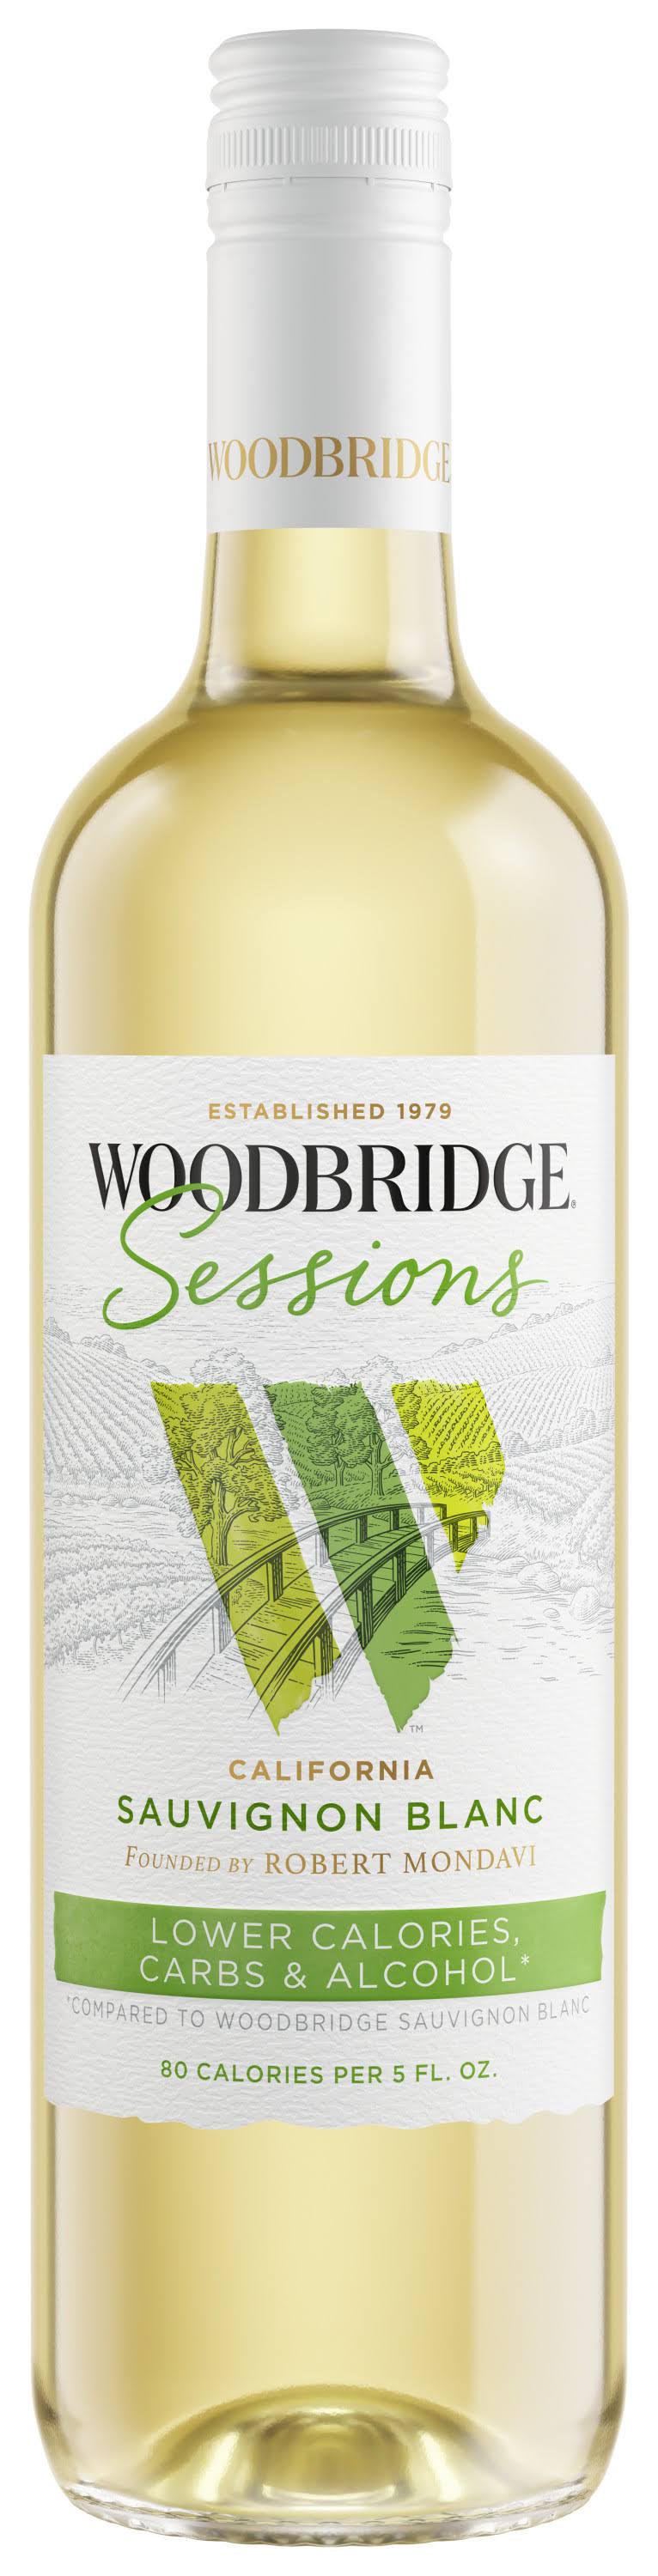 Woodbridge Sessions Sauvignon Blanc 750ml